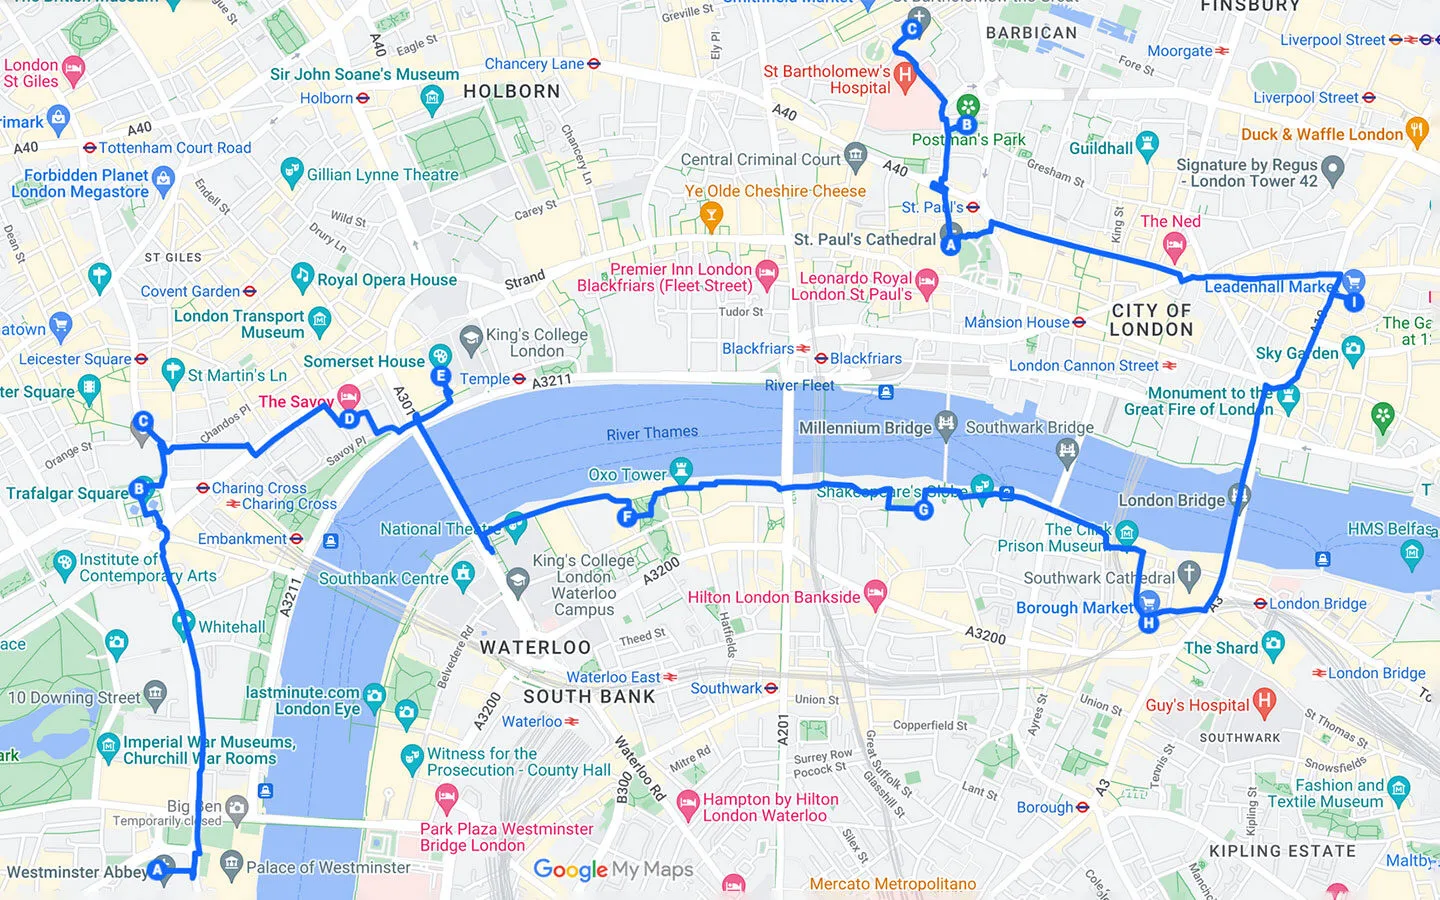 London film locations walking tour map